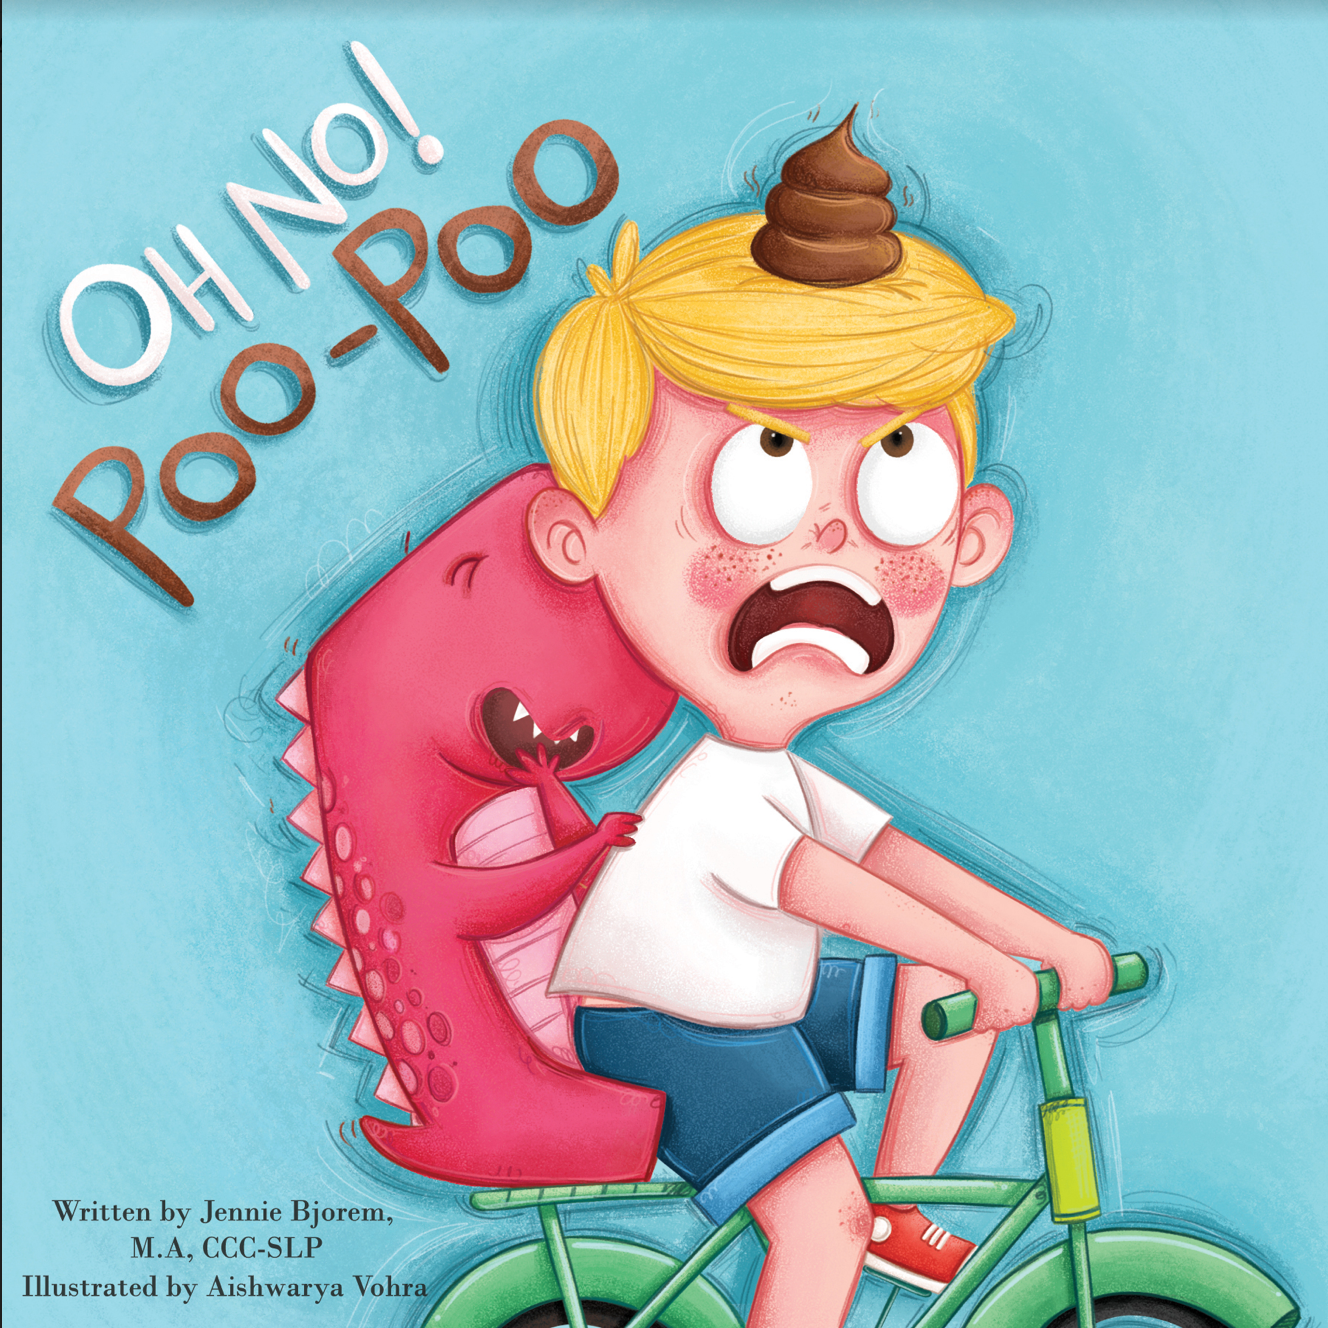 [title]OH NO Poo-Poo Board Book